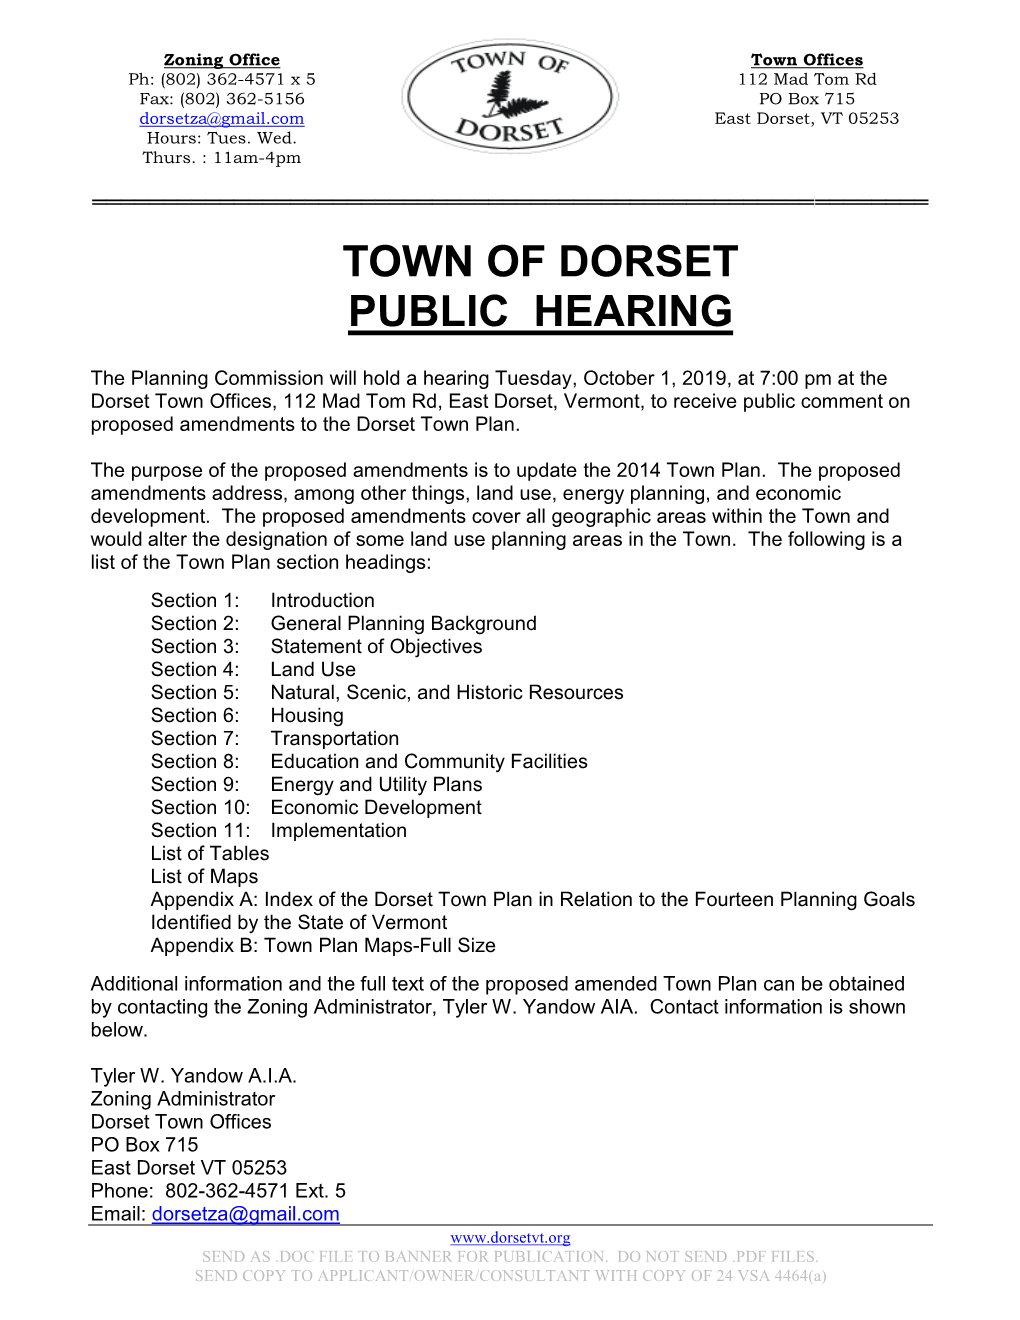 Dorset Town Plan